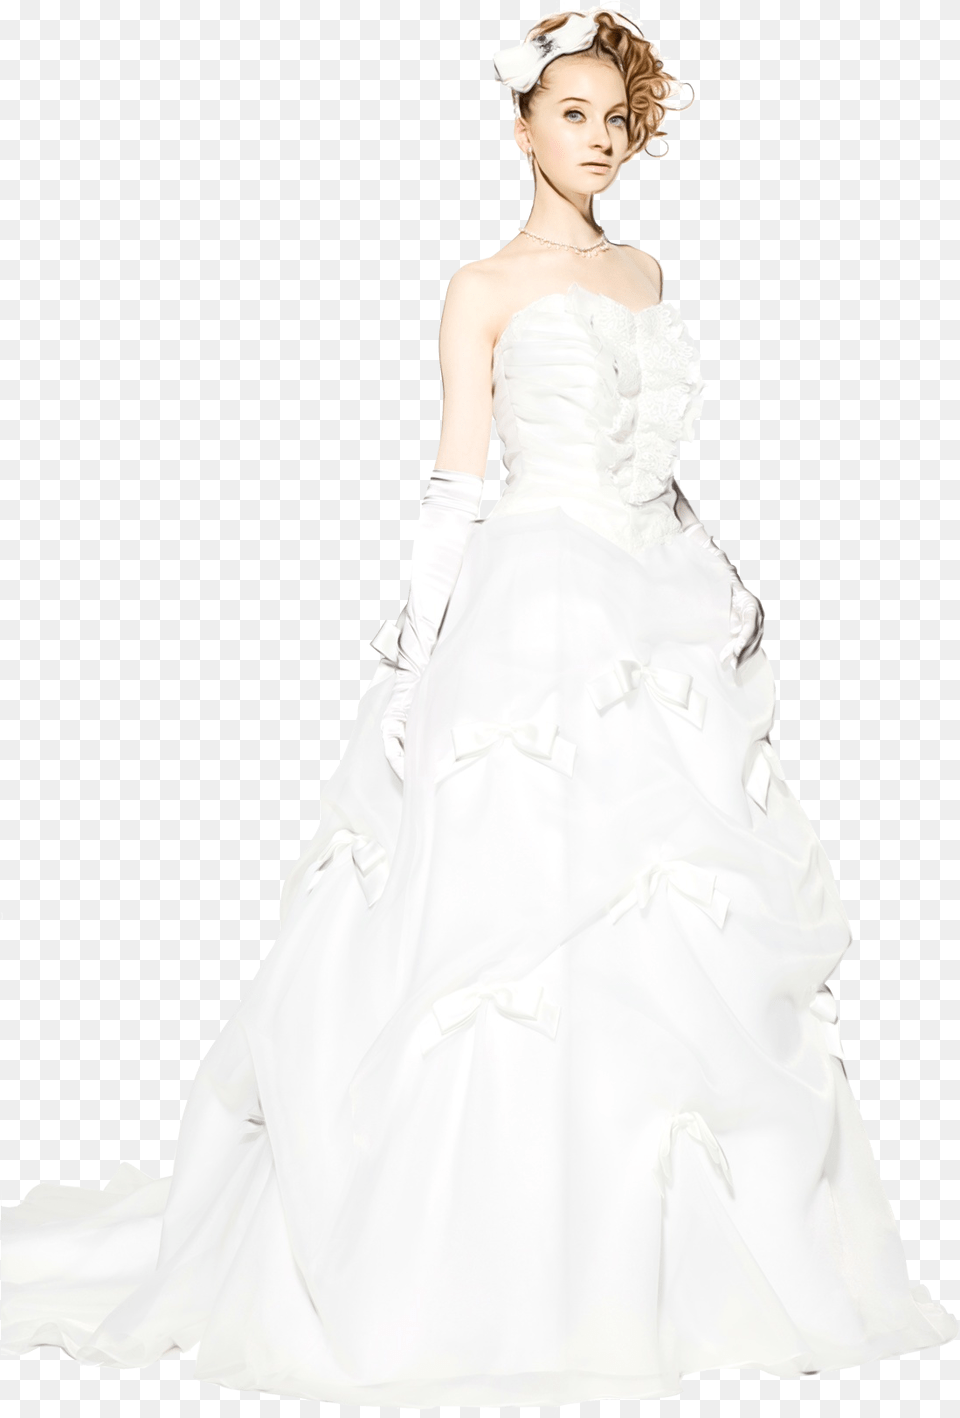 Wedding Dress Satin Shoulder Gown Girl In Wedding Dress Transparent Background, Formal Wear, Wedding Gown, Clothing, Fashion Png